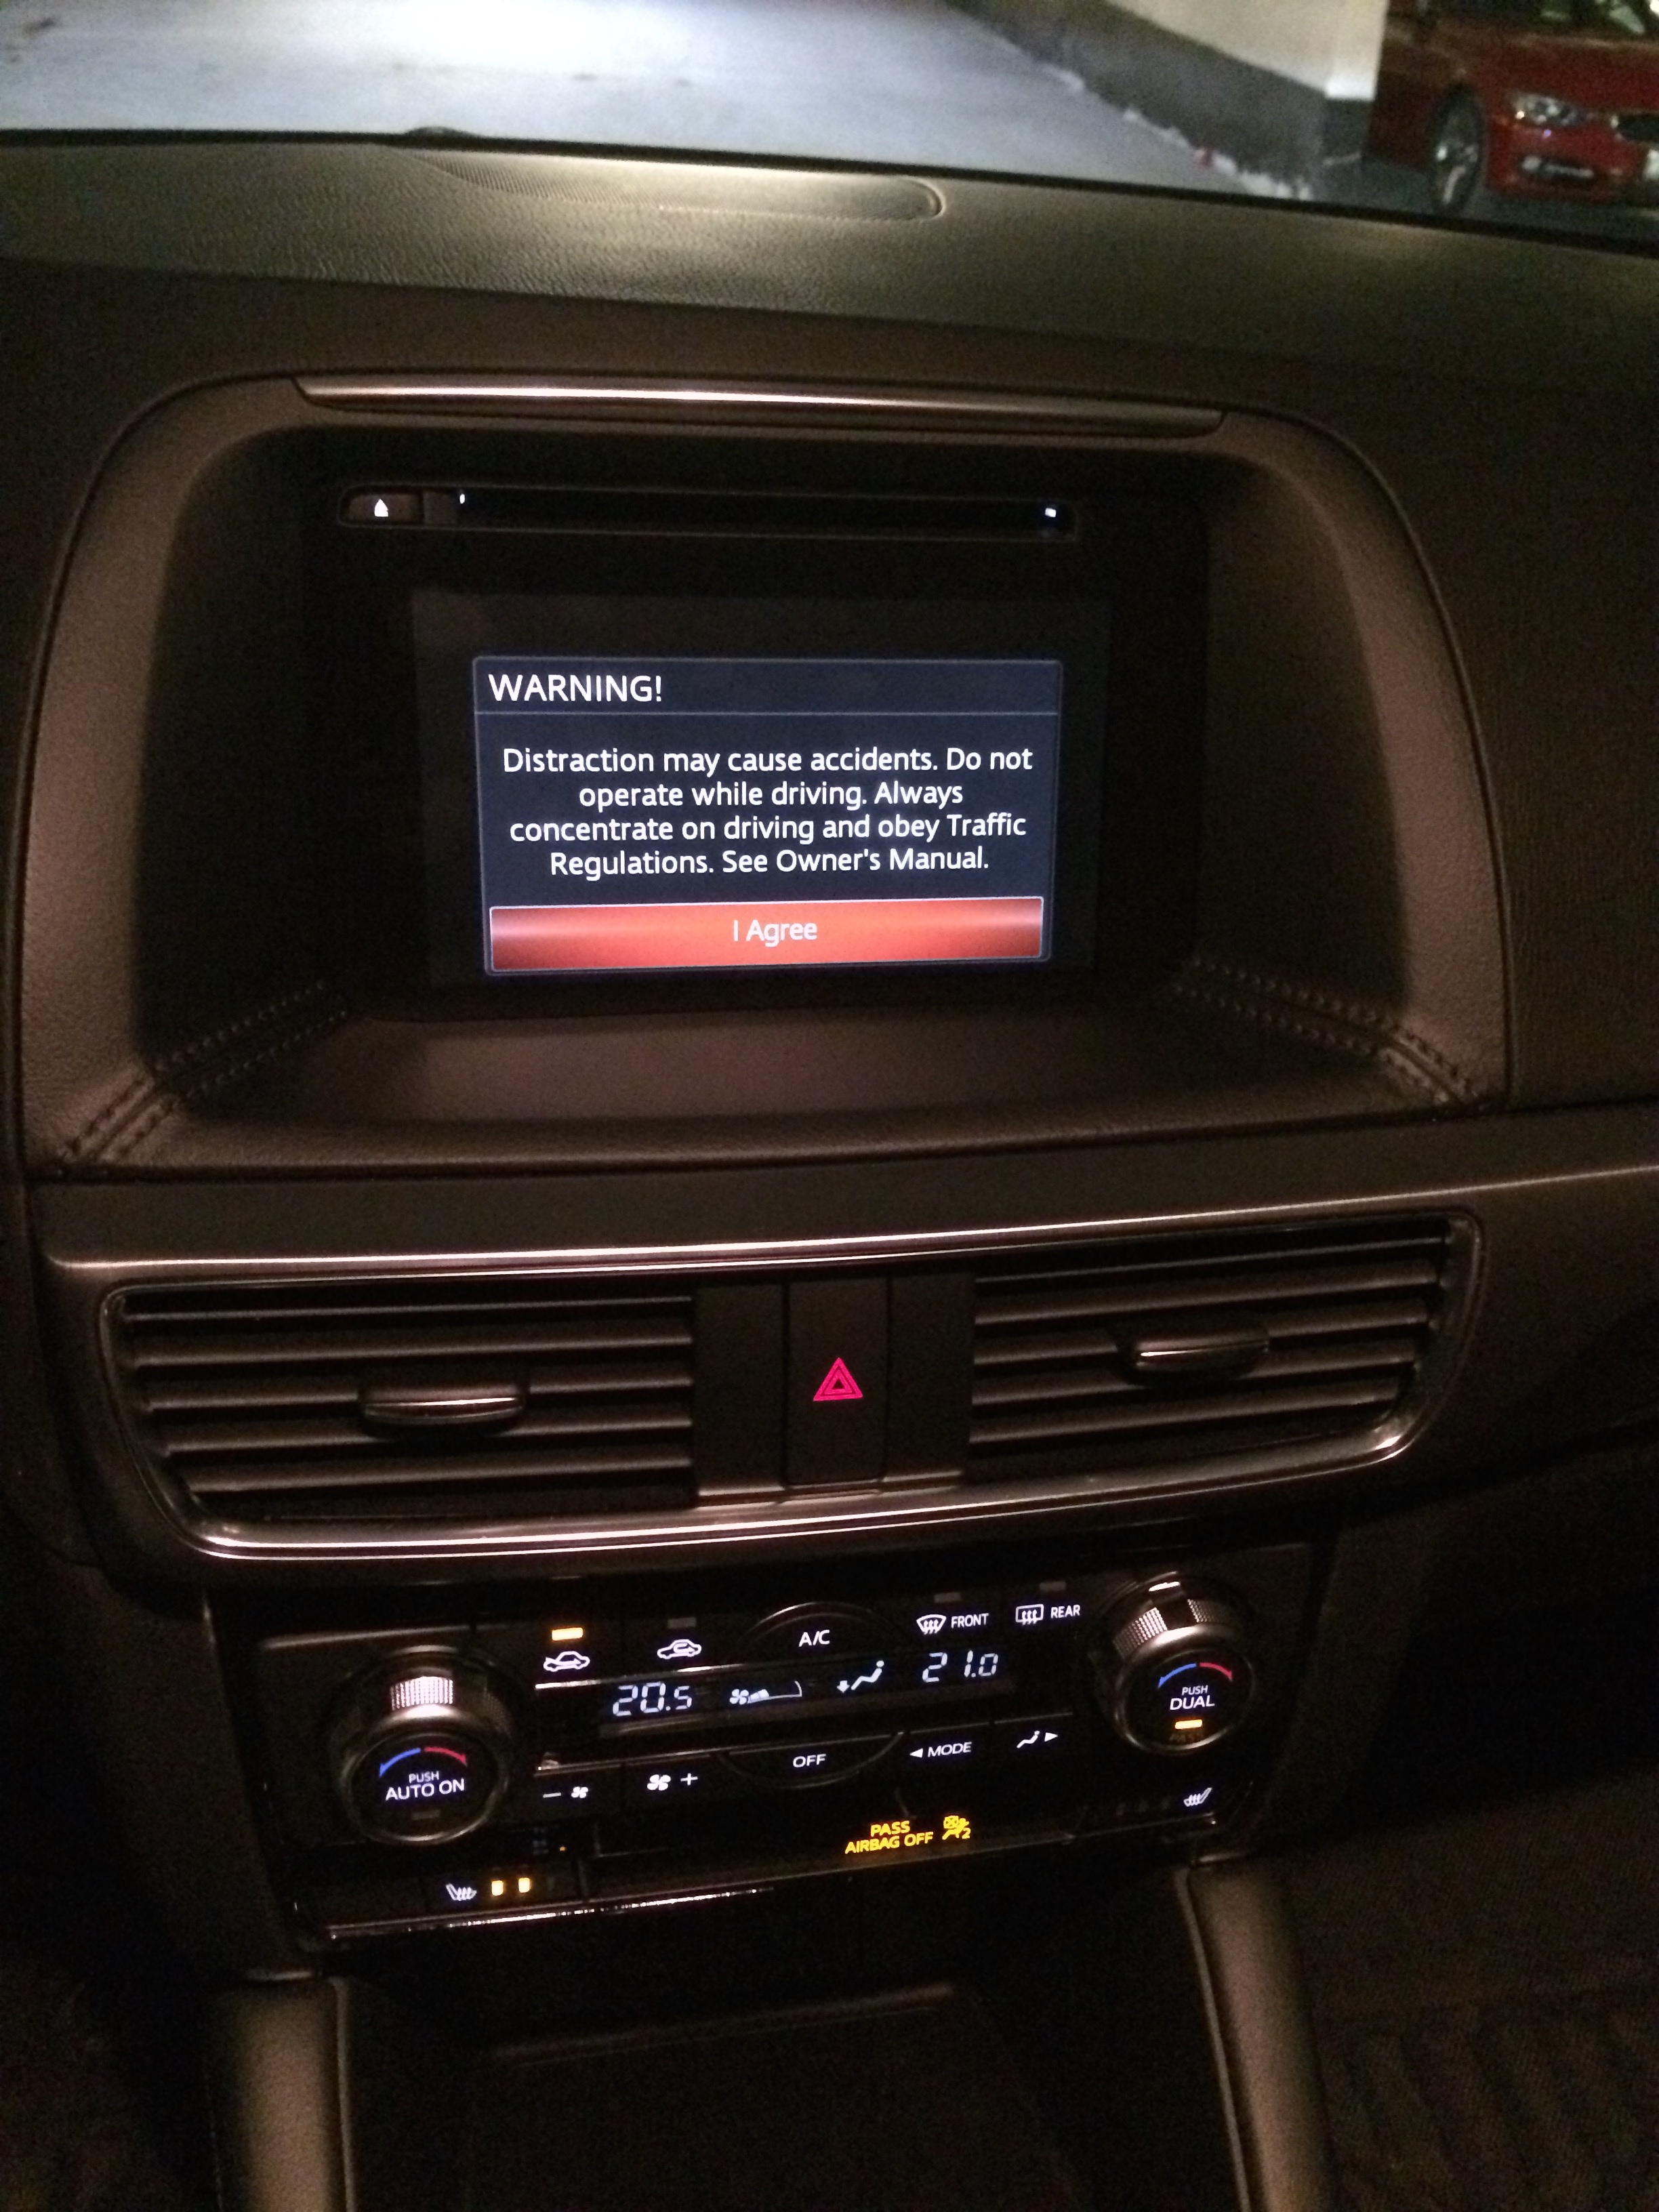 Mazda cx 7 navigation sd card download windows 7